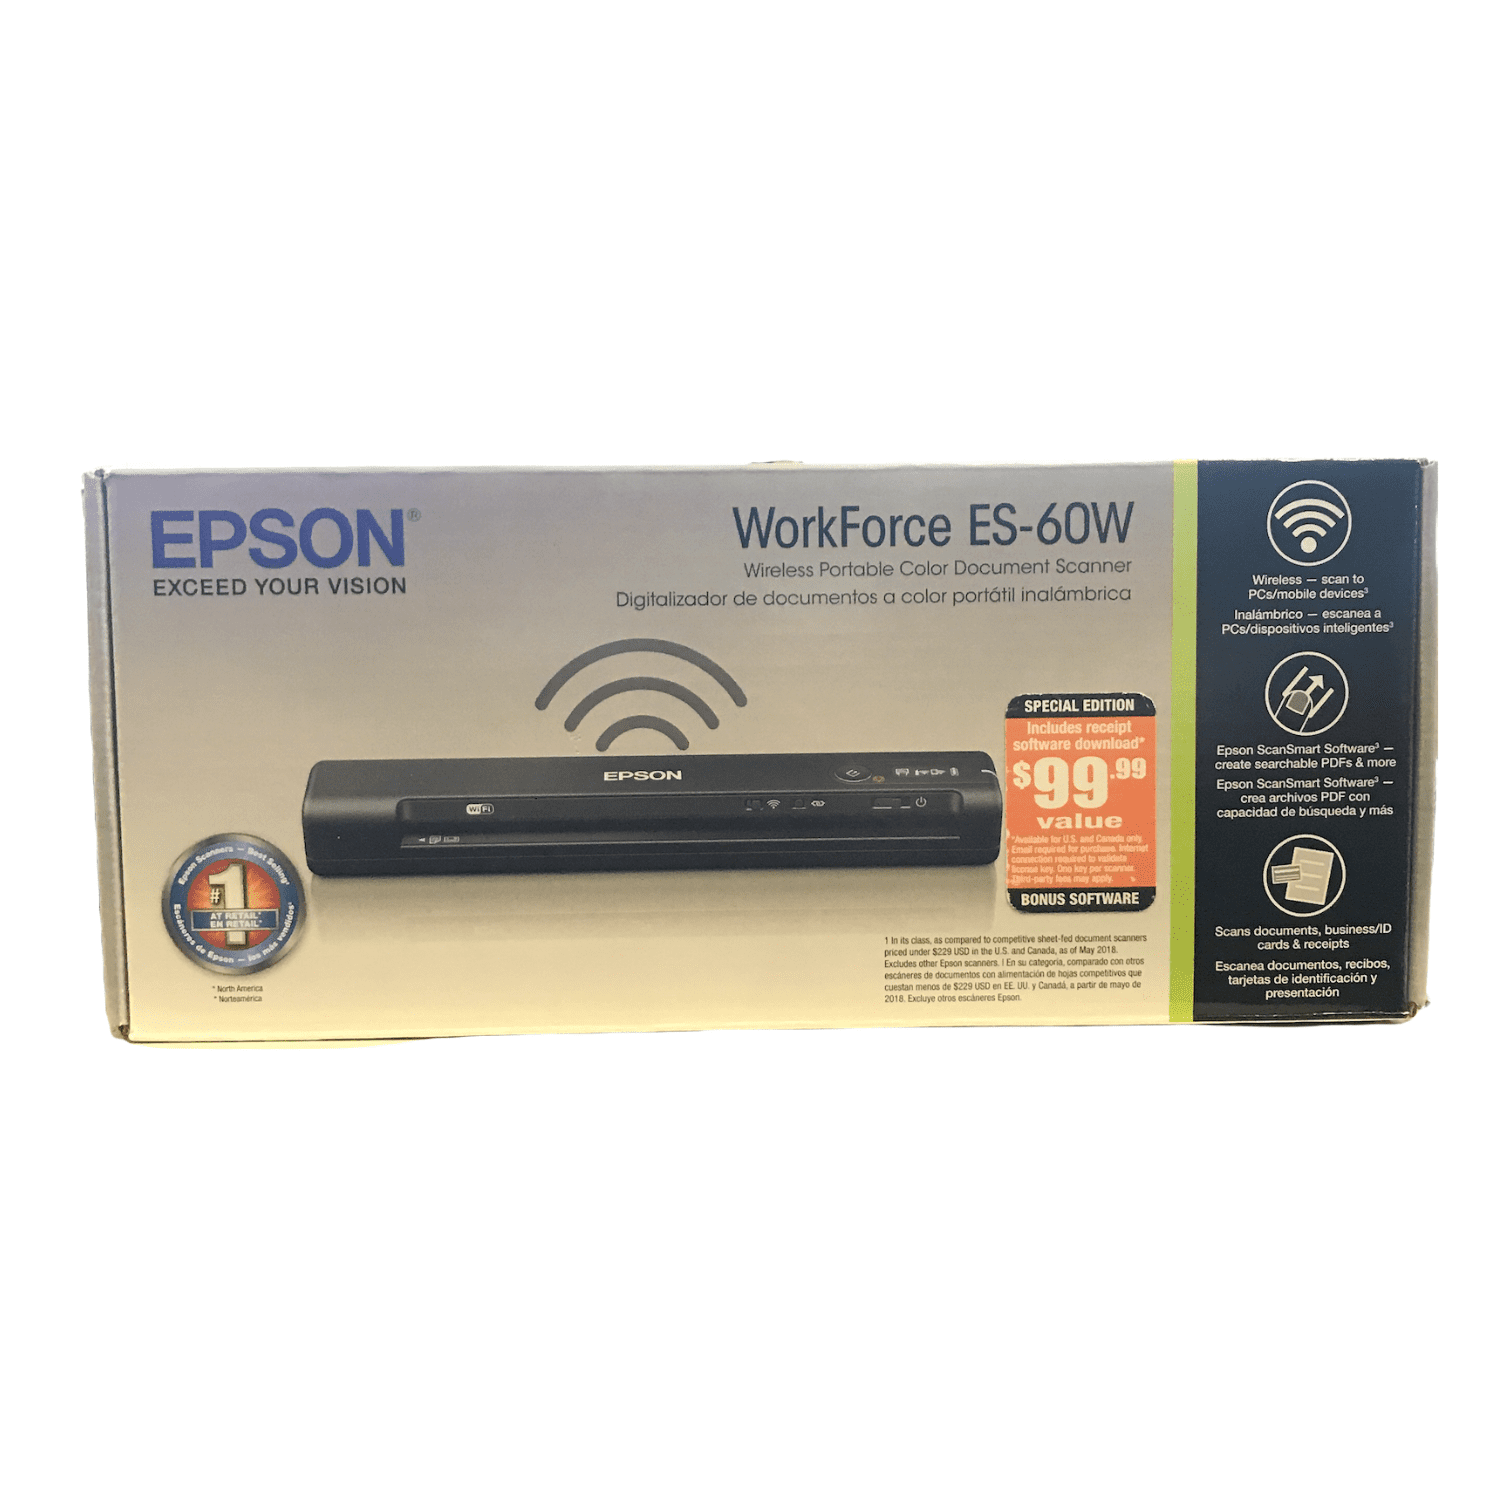 Epson Workforce ES-60W Document Scanner for PC and Mac Walmart.com